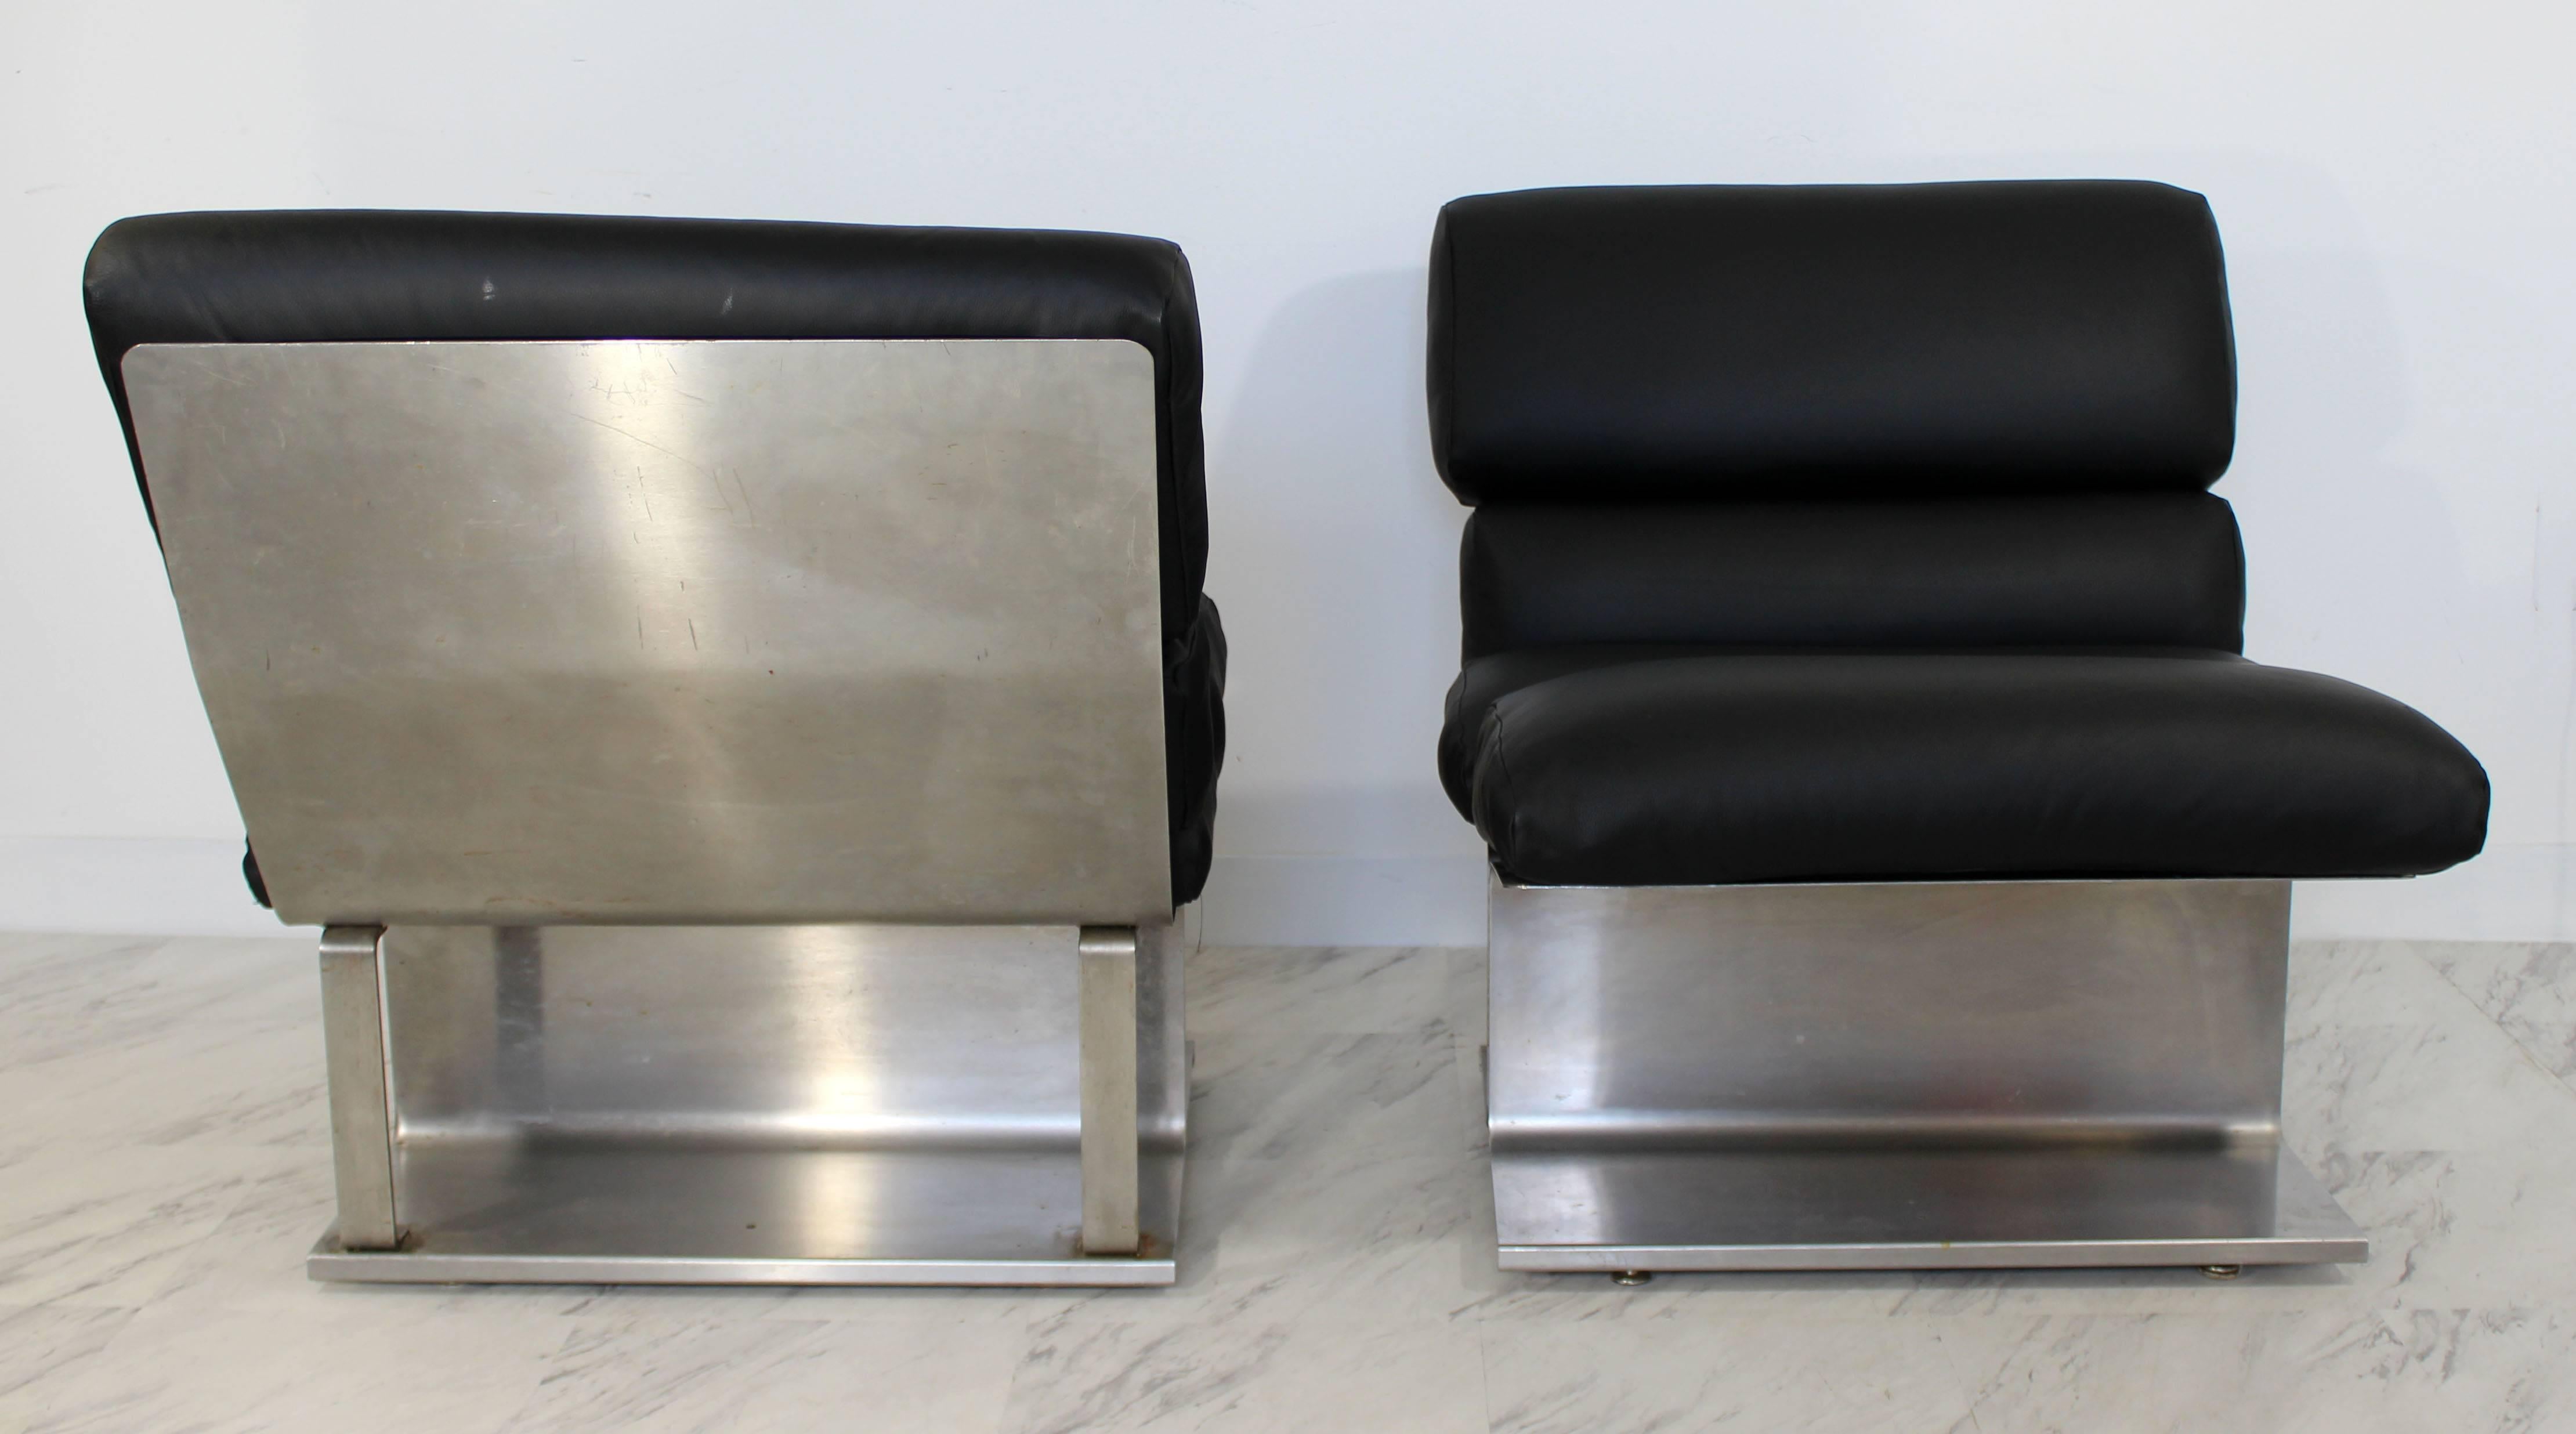 Late 20th Century Mid-Century Modern Pair of Steel Leather Lounge Chairs Paul Geoffroy Uginox